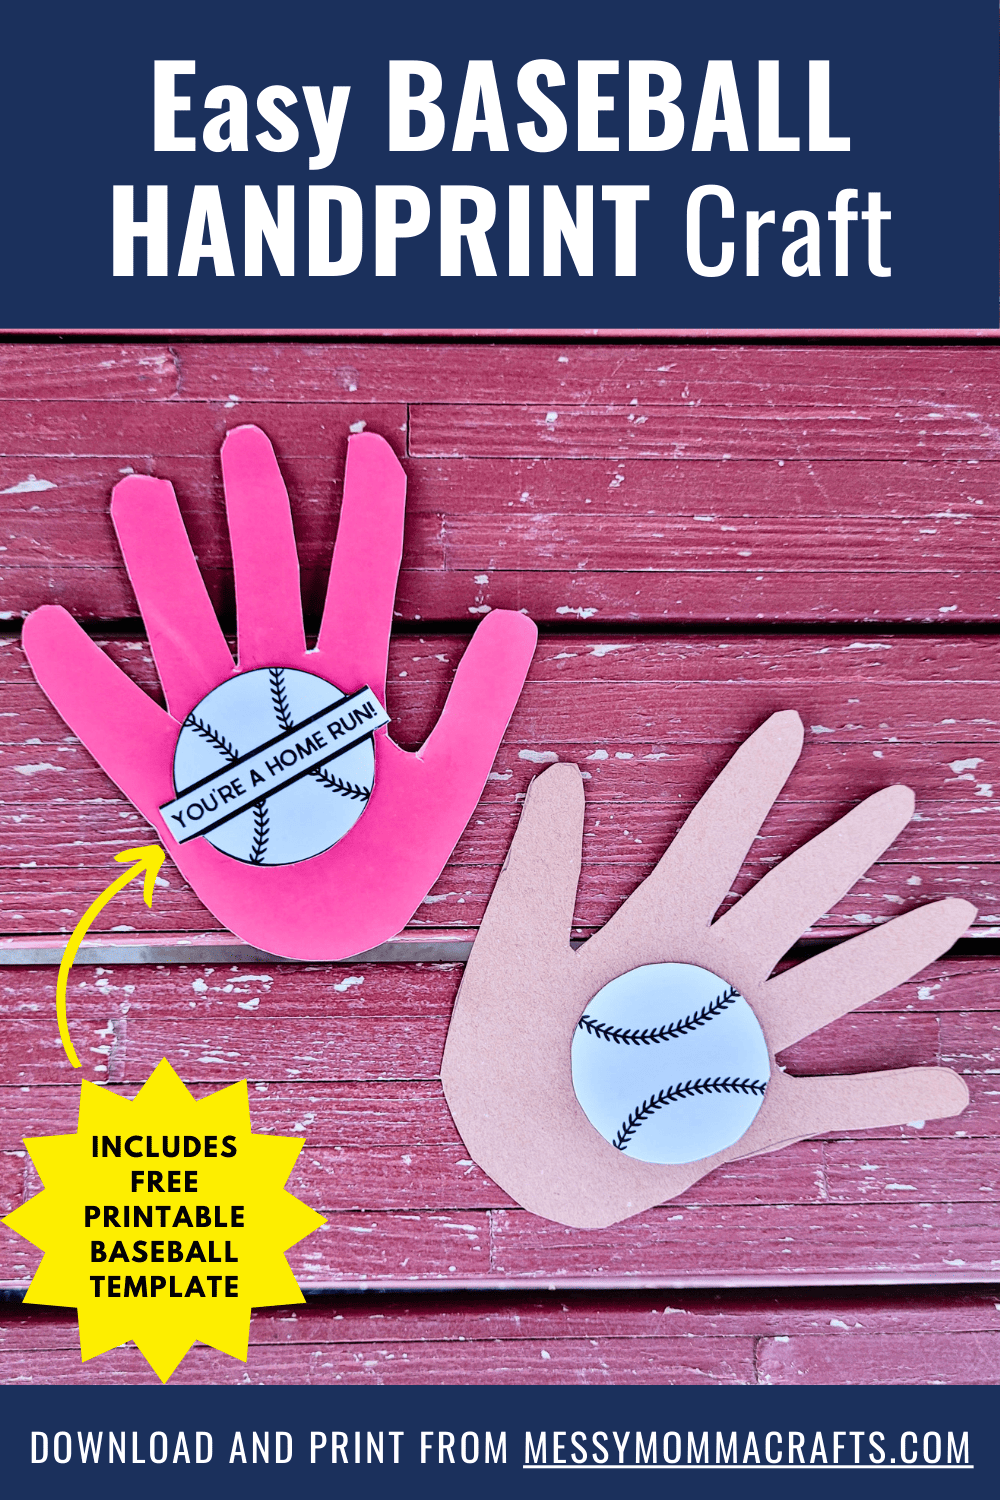 Easy baseball handprint craft using a child's hand and a printable baseball template.